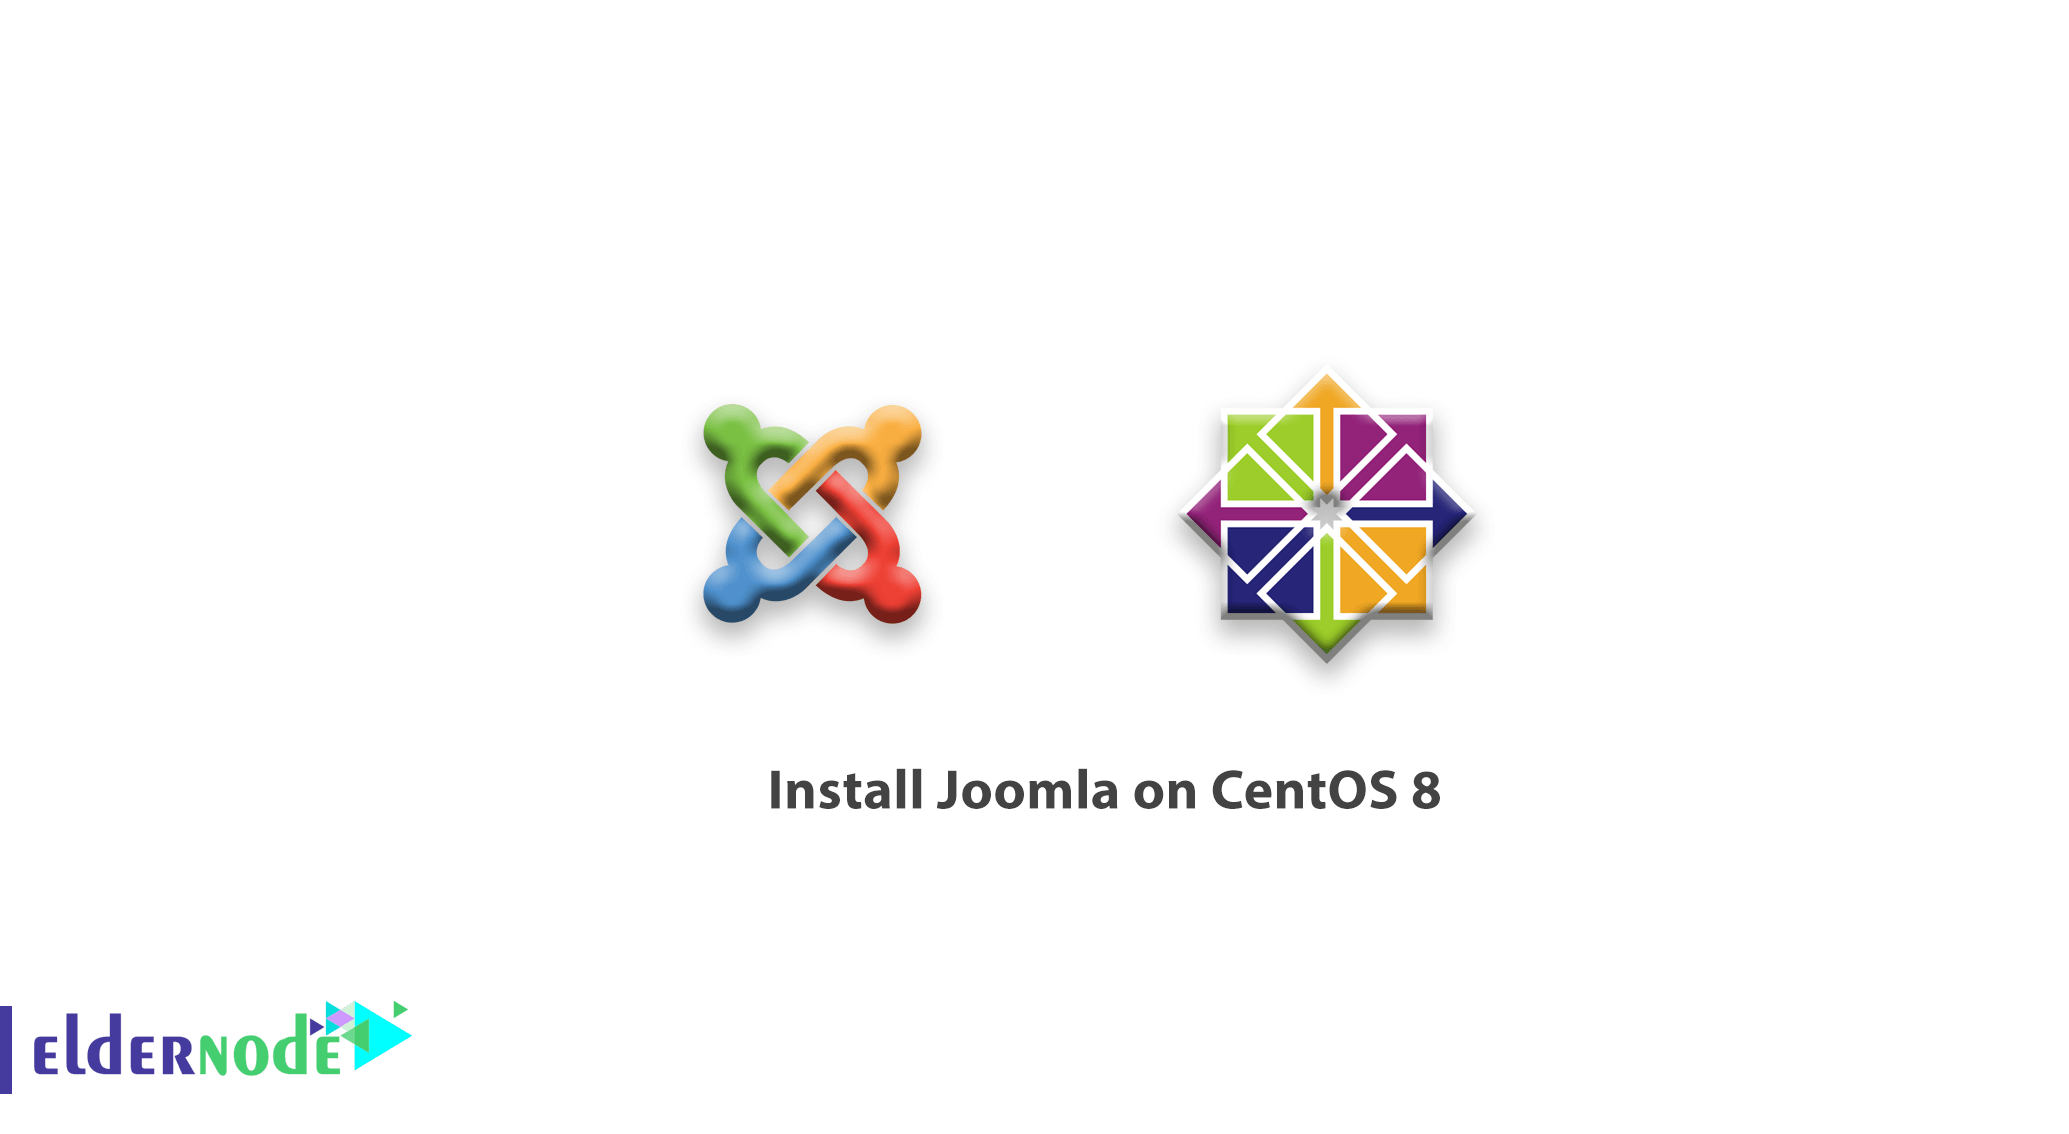 How to install Joomla on CentOS 8